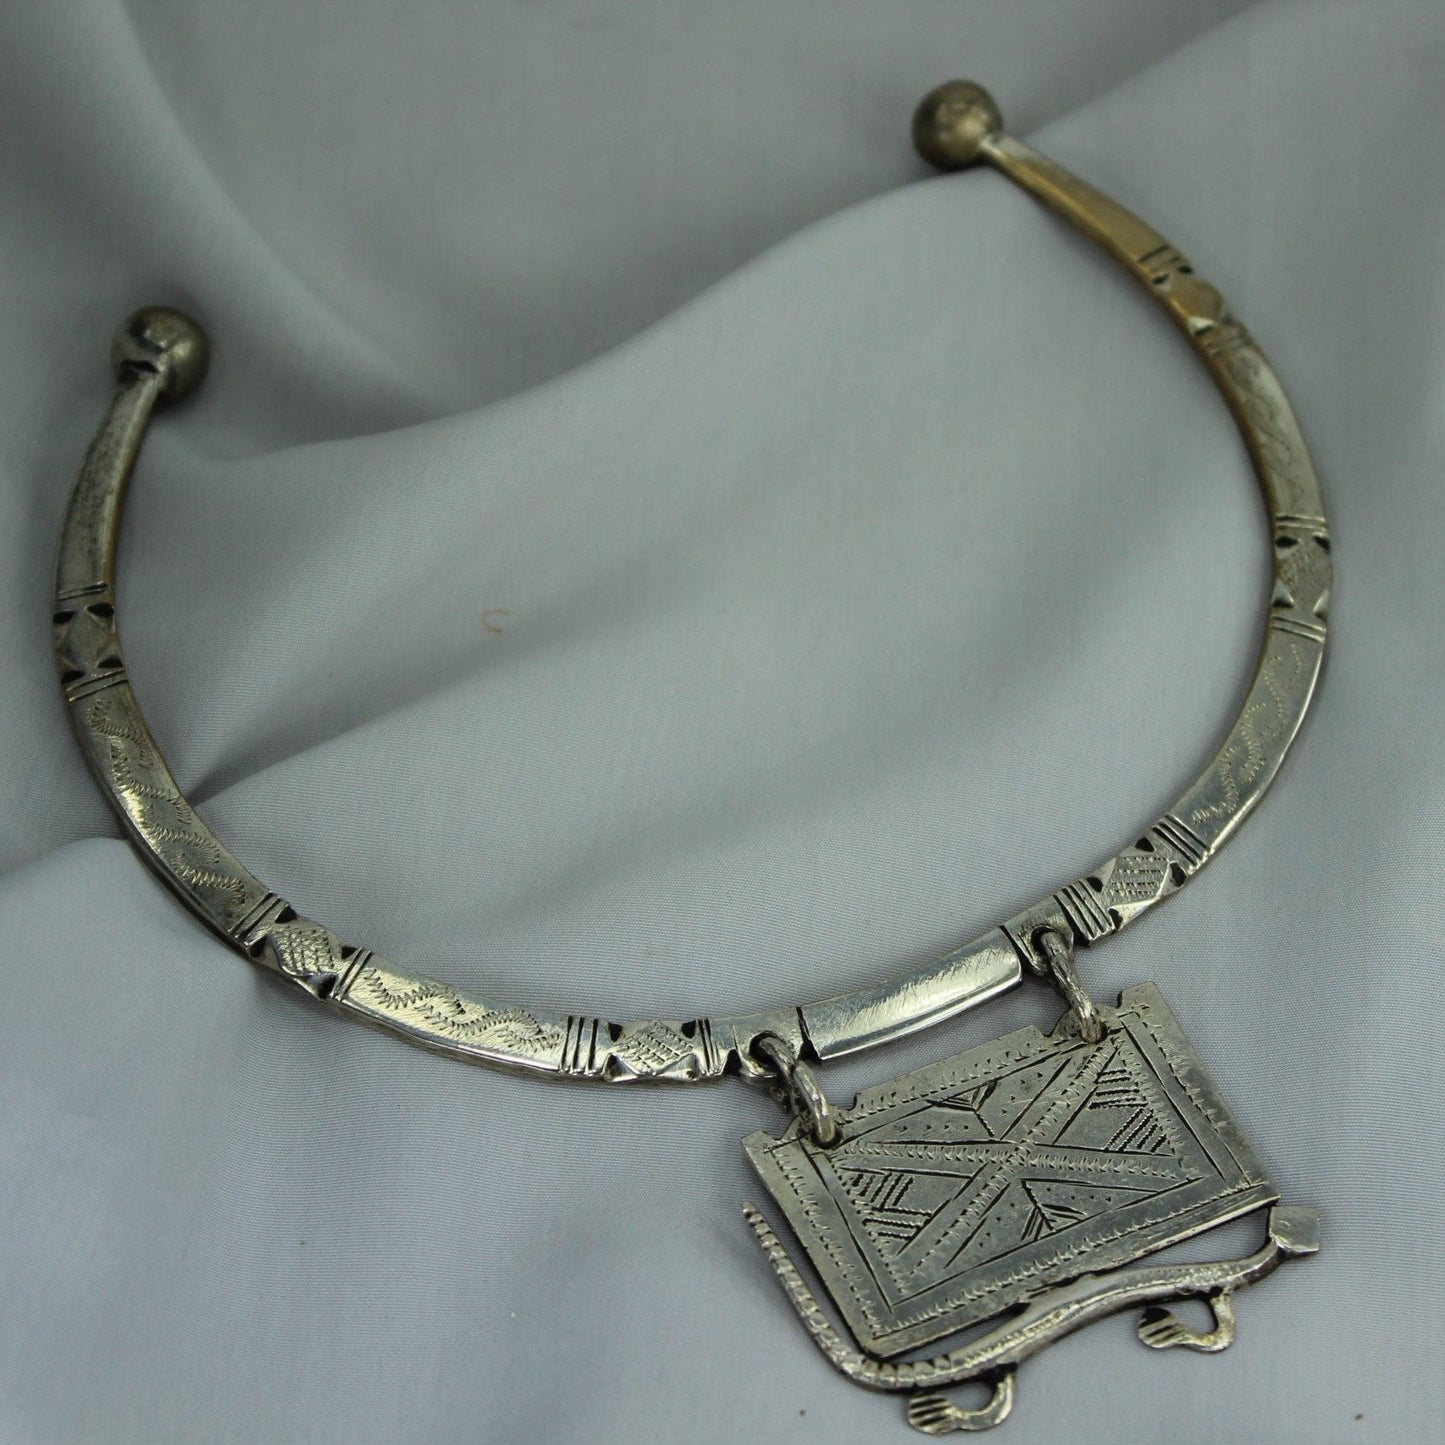 Vintage Necklace Cultural Tribal Choker Silver Metal Medallion Gecko Lizard Reptile heavy